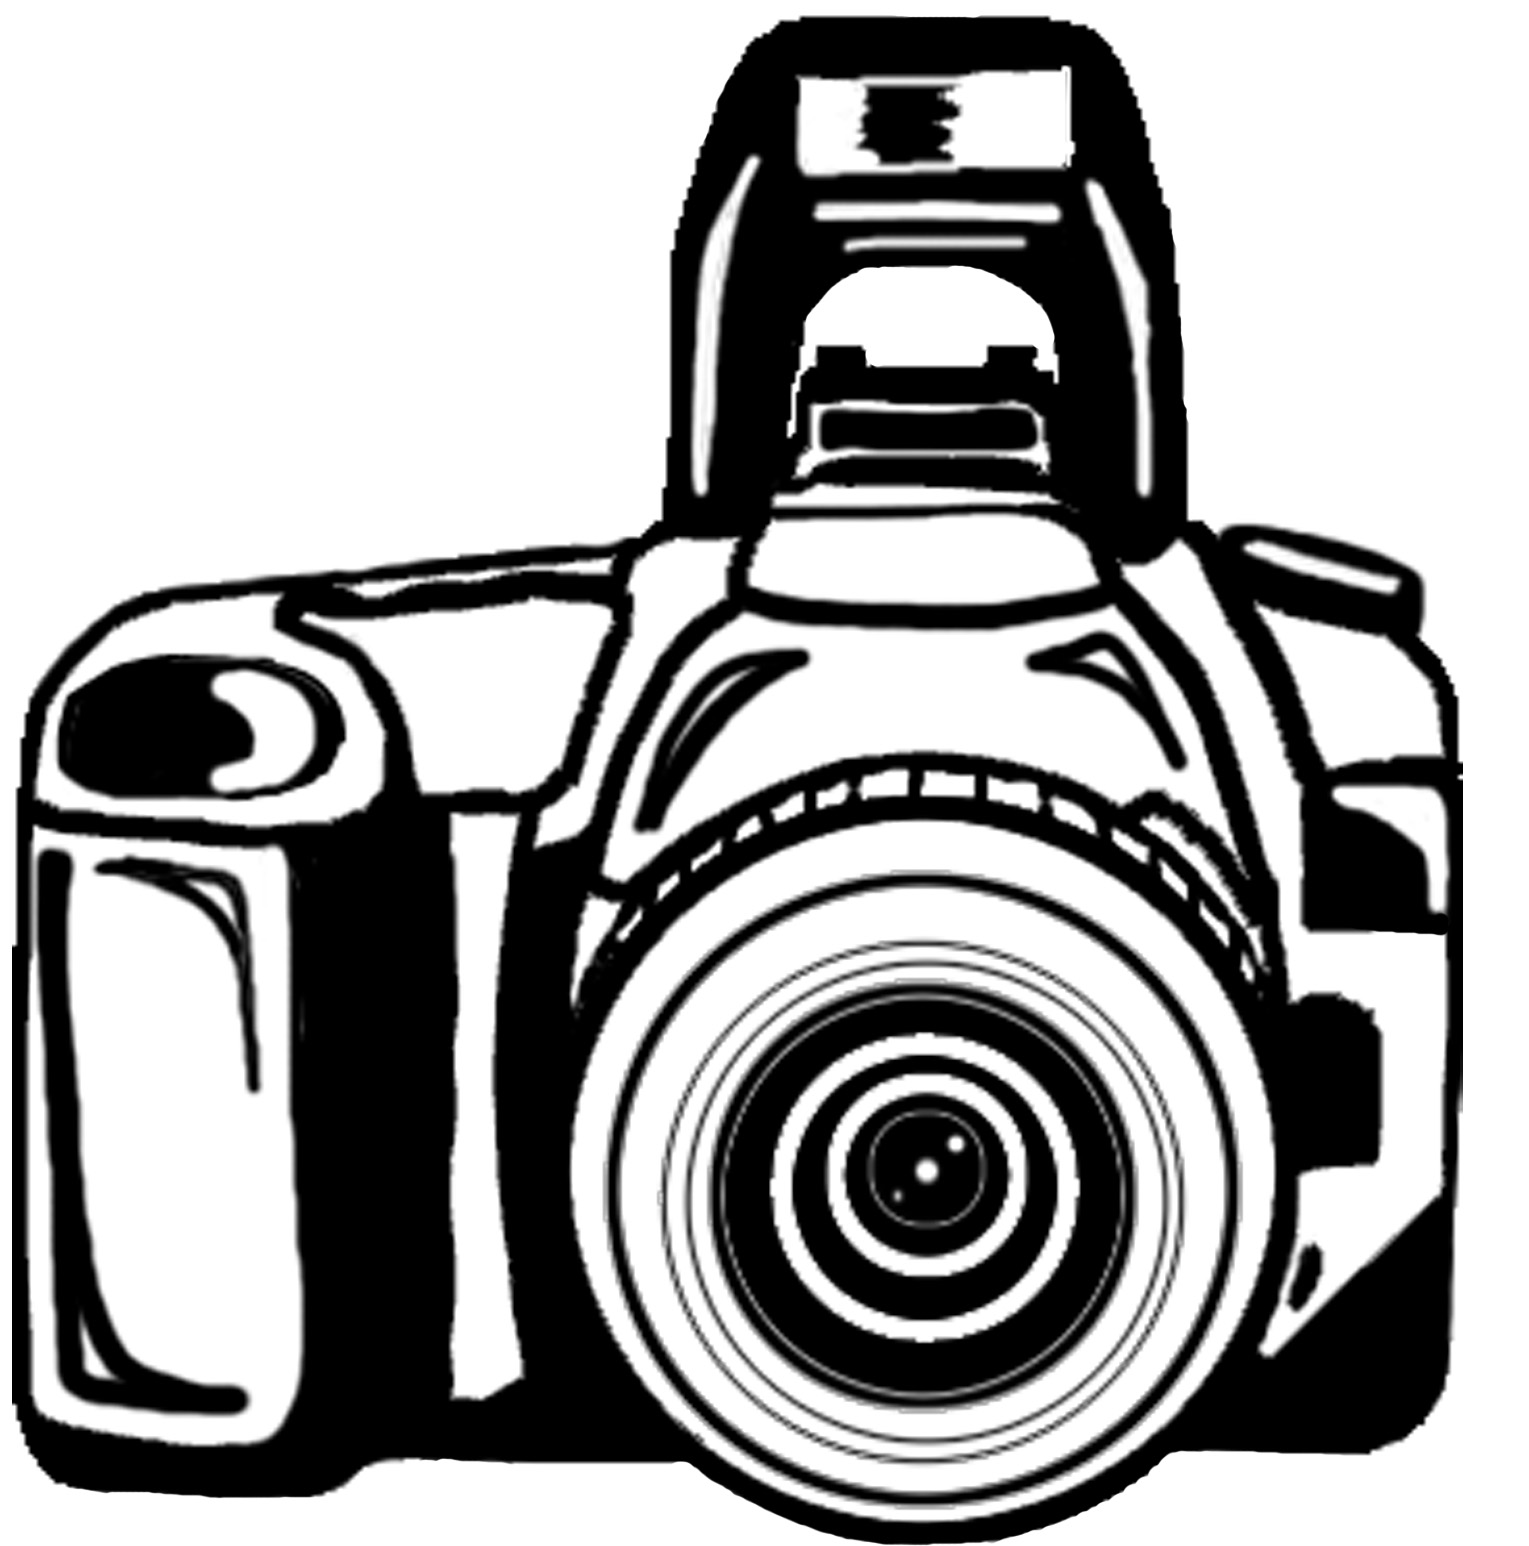 camera clip art for logo - photo #37